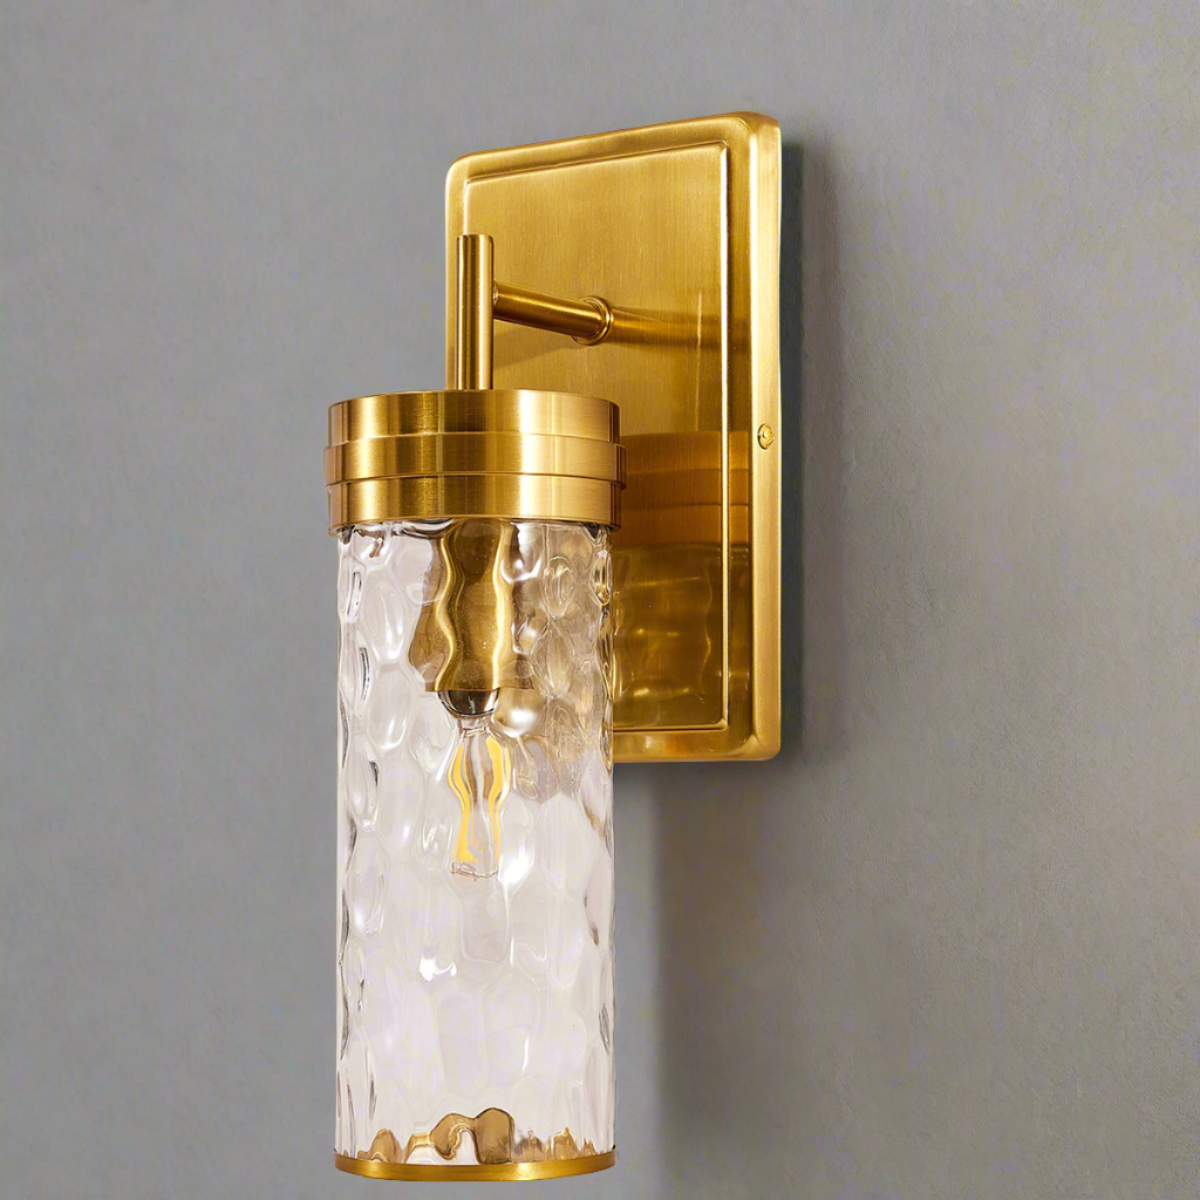 Modern Tube Hammer Glass Shade Wall Sconces Straight Arm Signle Sconces for Bathroom, Bedroom,Hallway